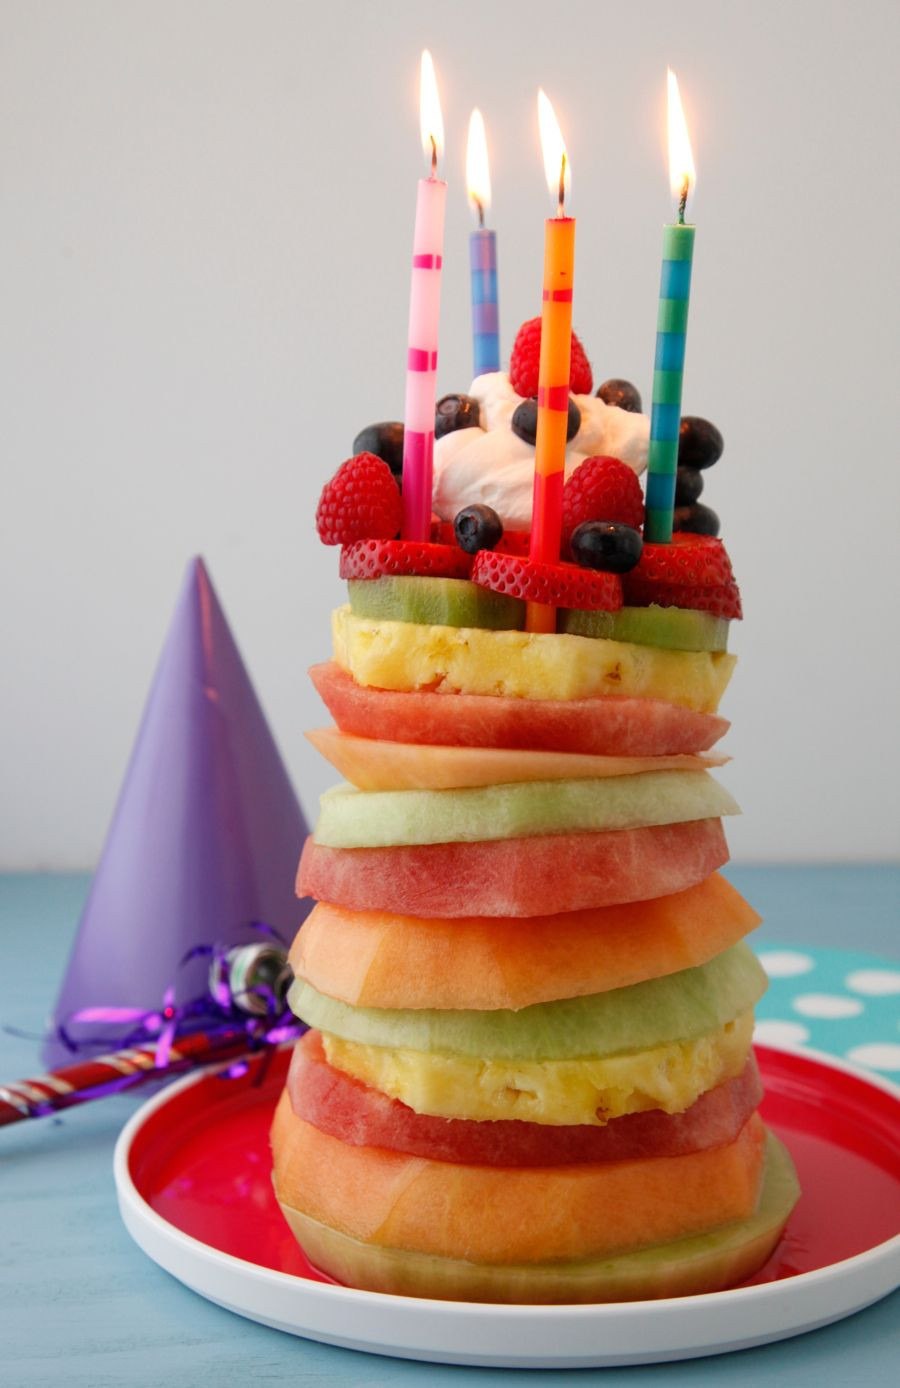 Healthy Birthday Cake Alternatives
 Fruit Tower Birthday Cake Recipe